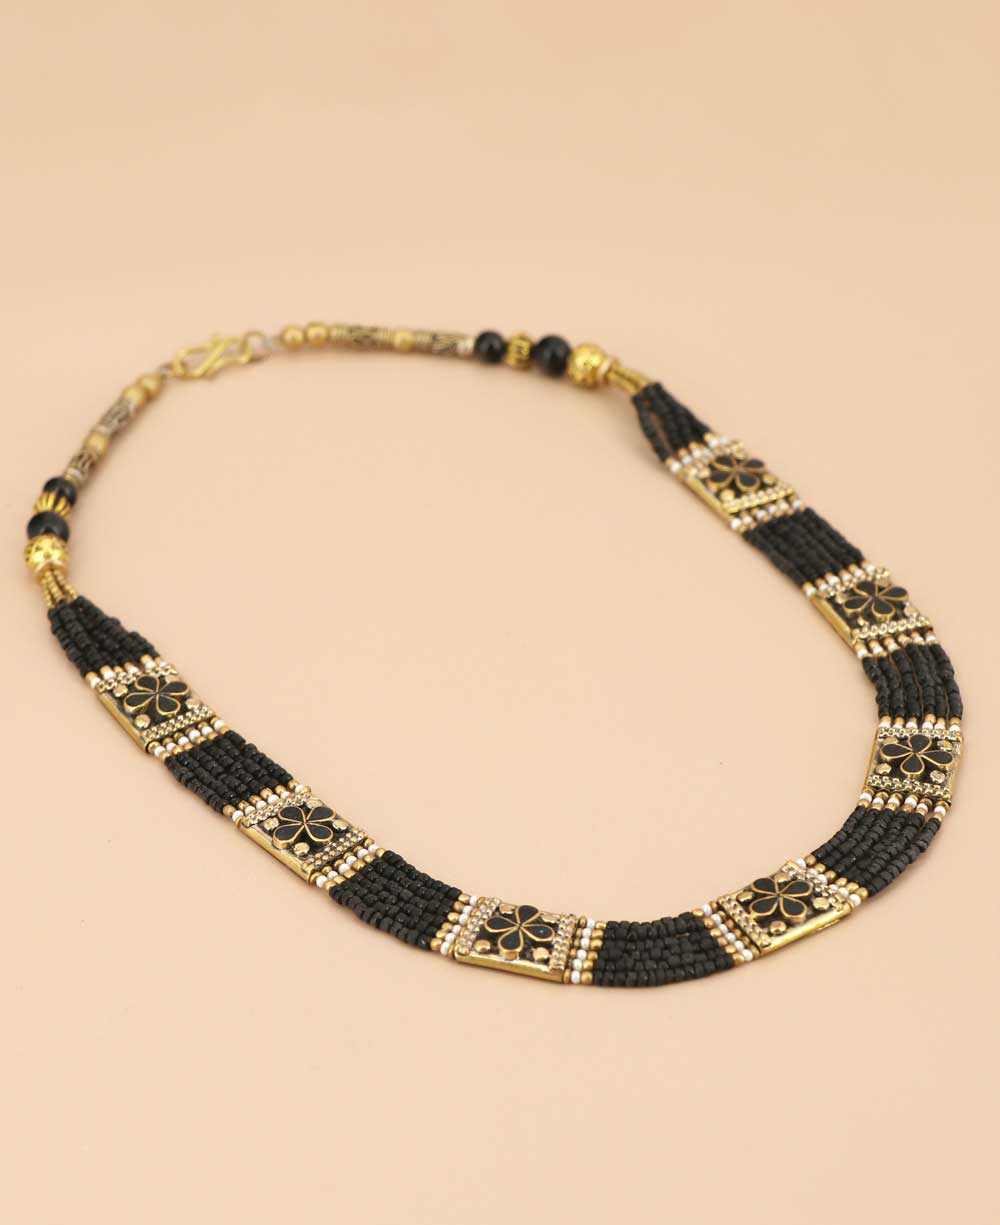 Handmade black clay bead necklace from Nepal